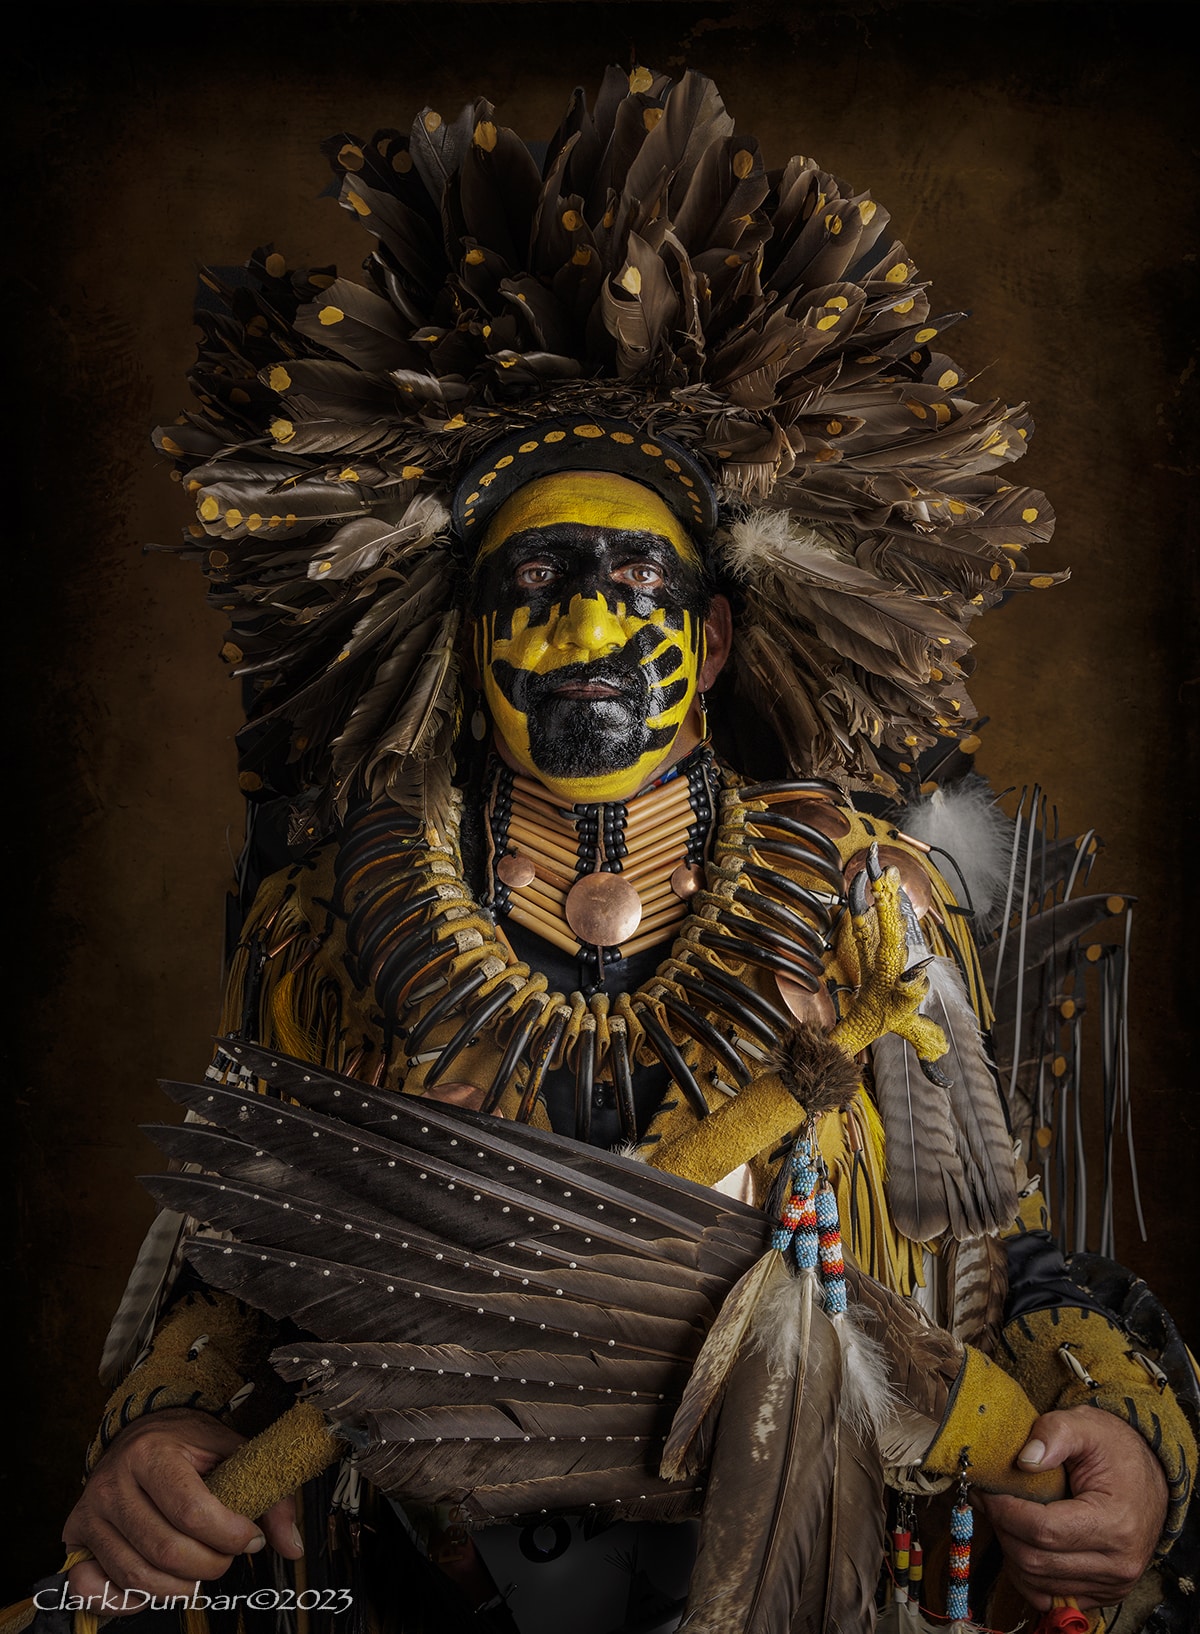 Man in Native American dress